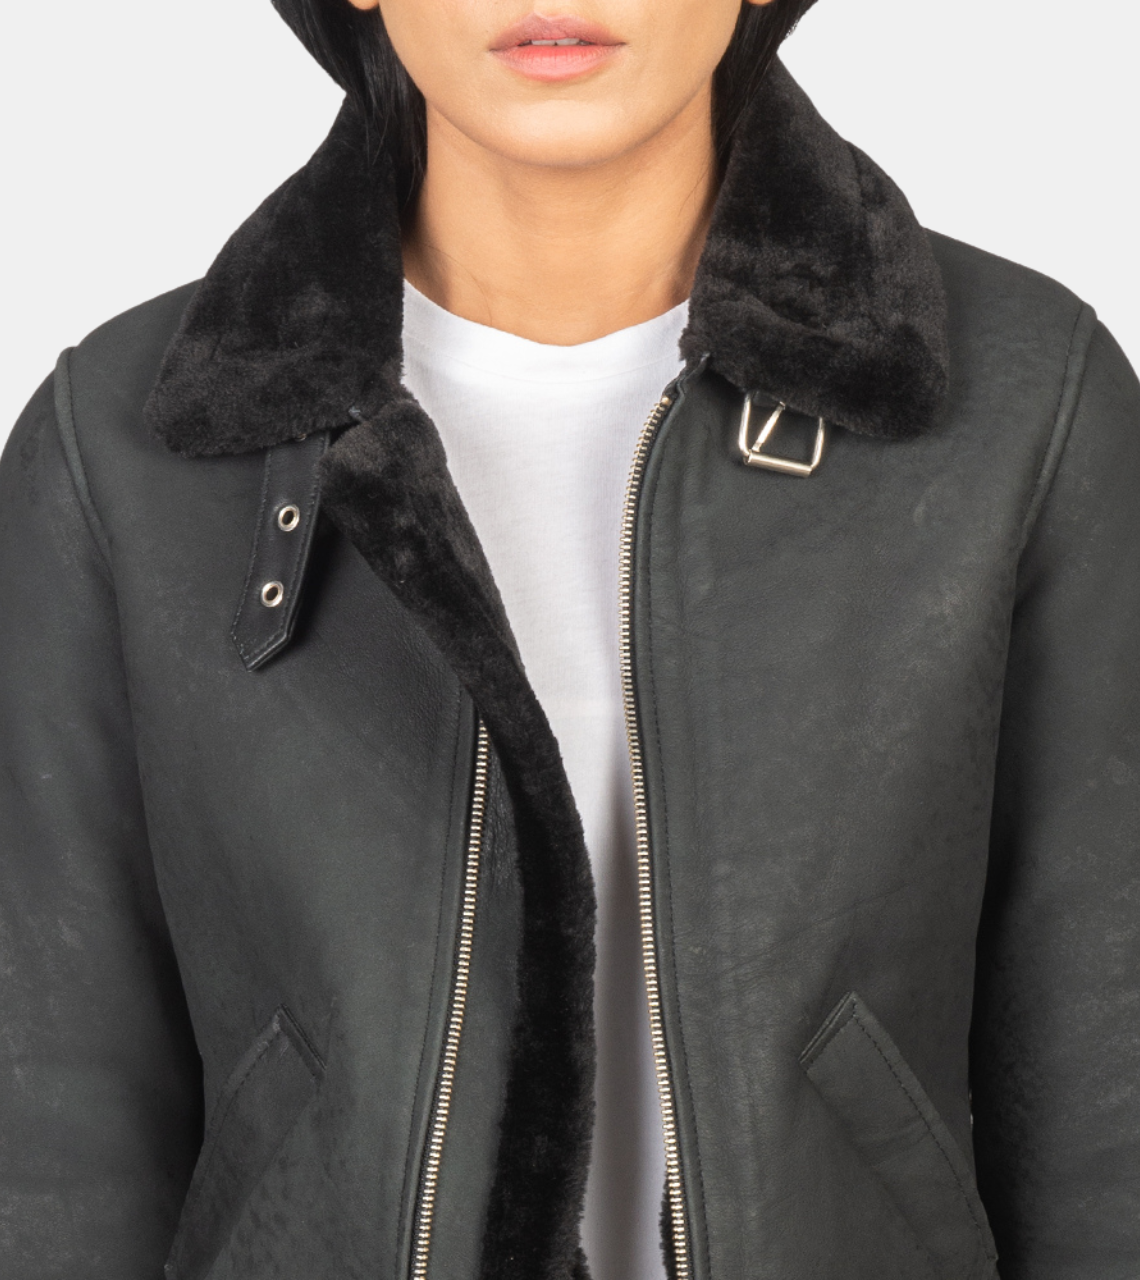 Maisiel Black Bomber Shearling Leather Jacket For Women's